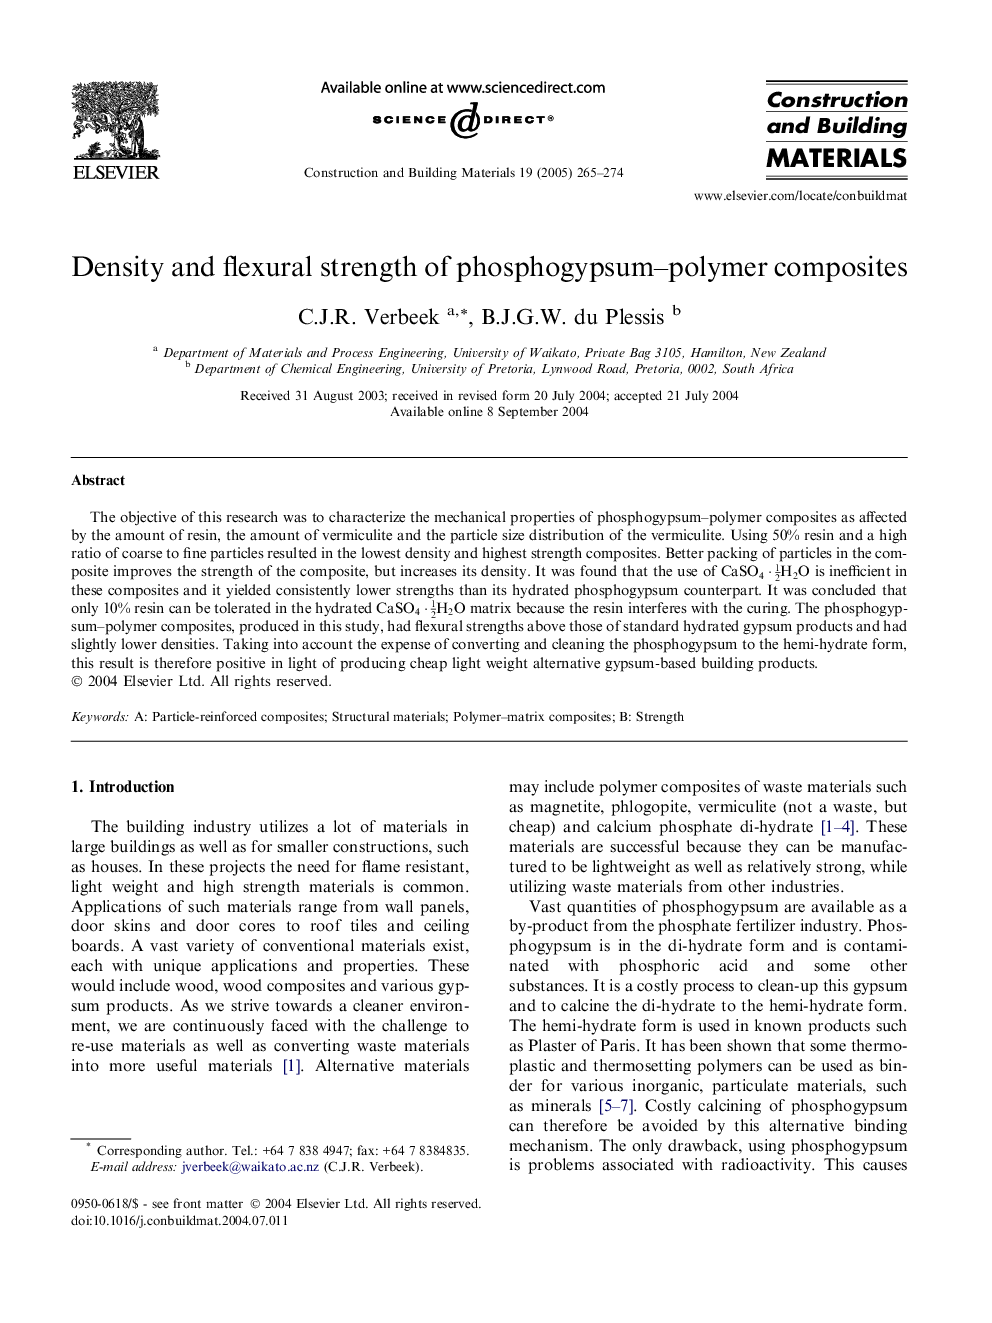 Density and flexural strength of phosphogypsum-polymer composites